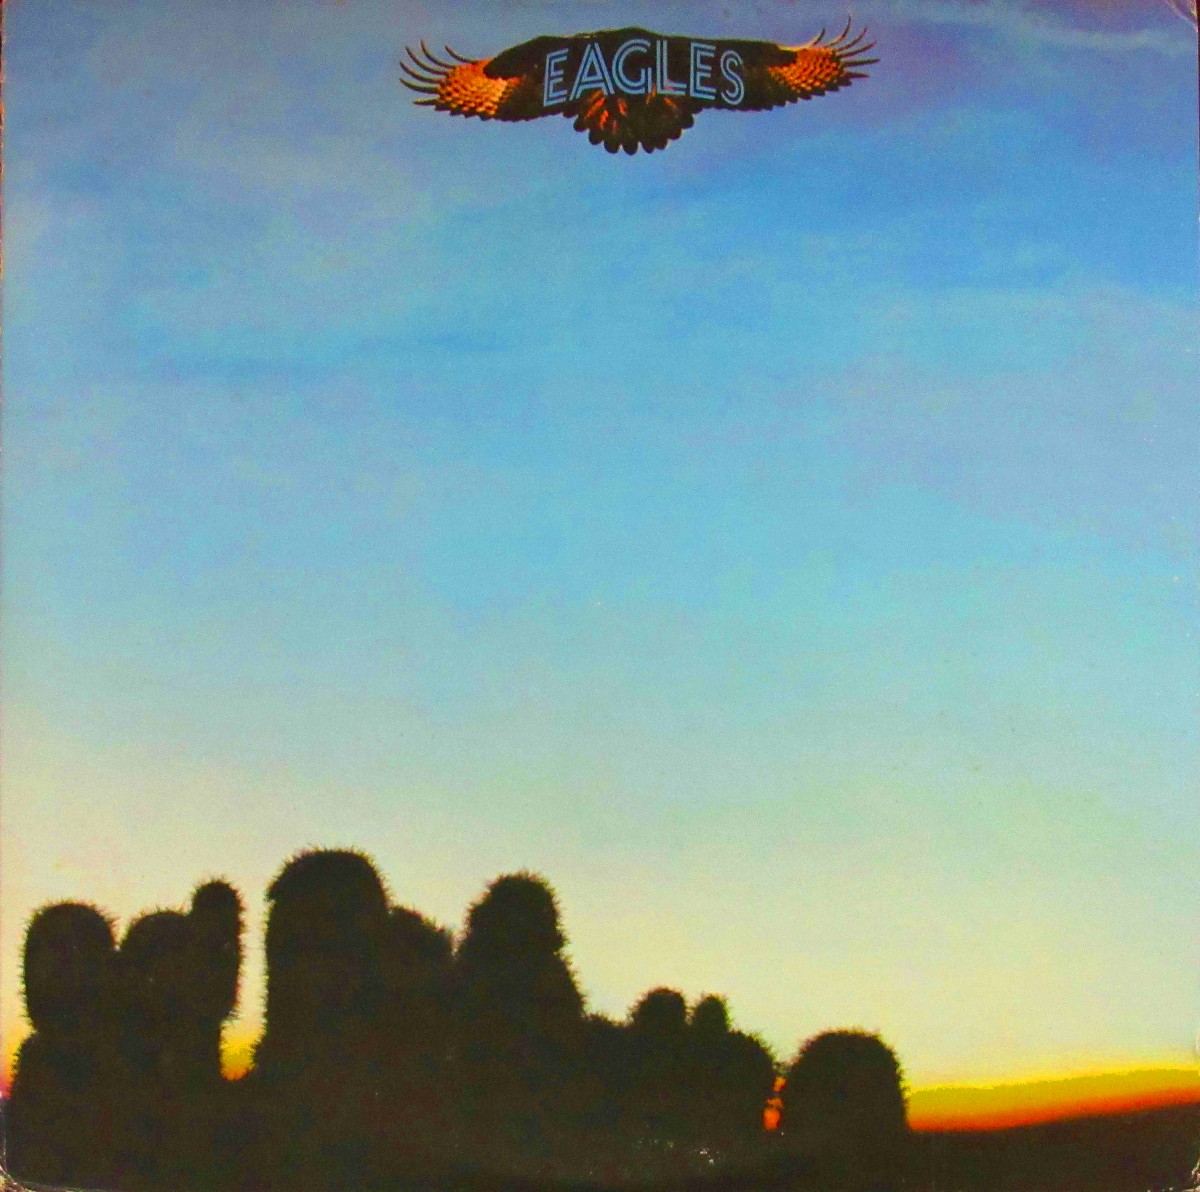 The Eagles, Eagles album